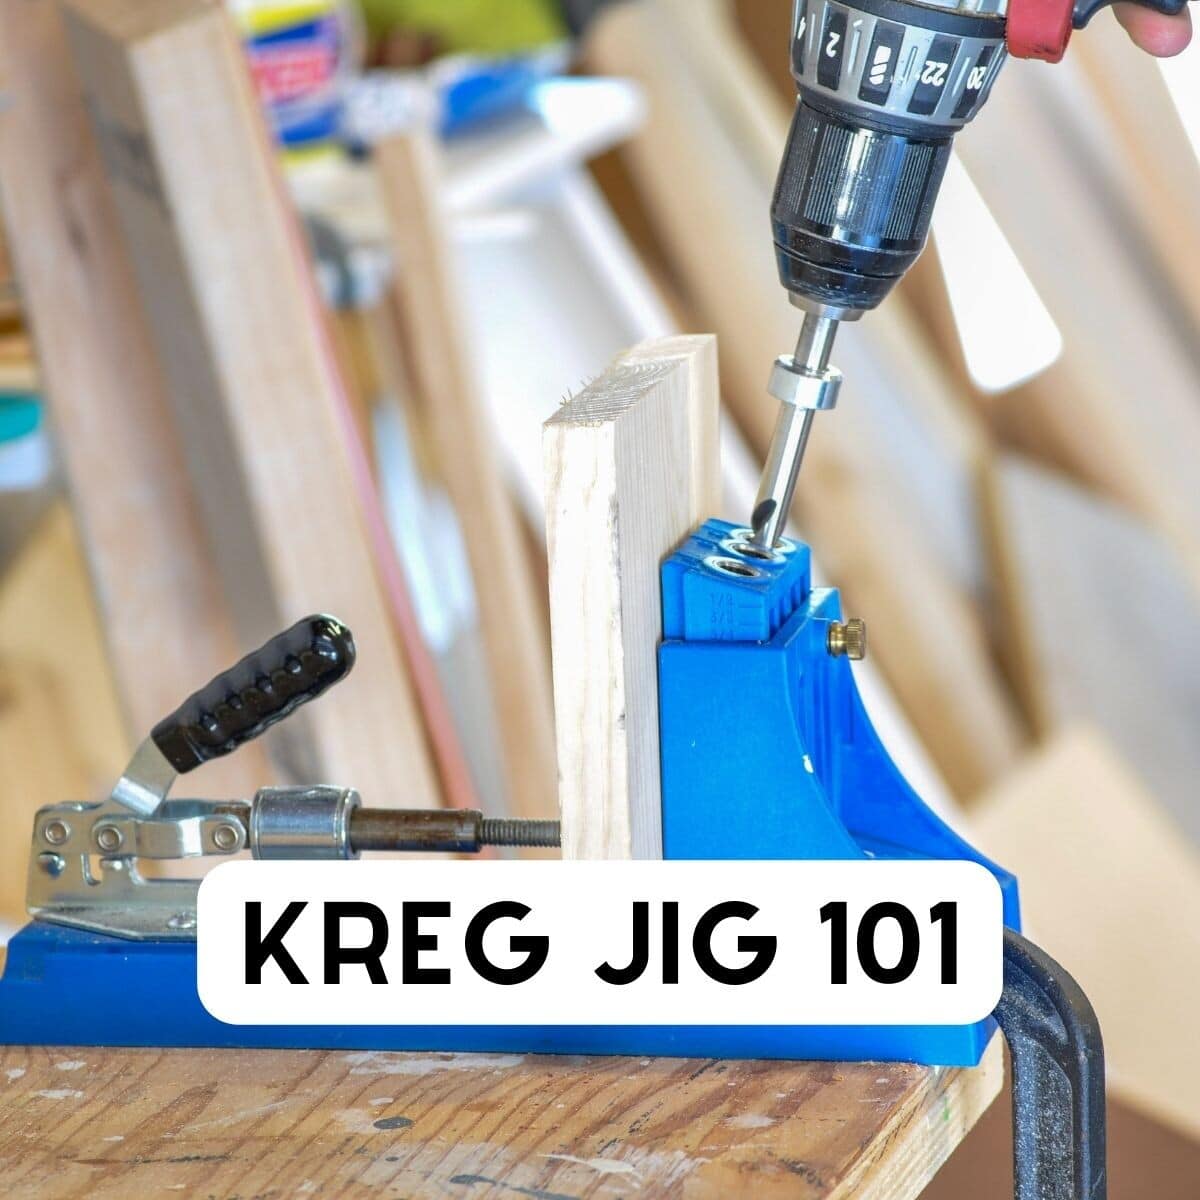 Kreg Jig on workbench with text " Kregjig 101"